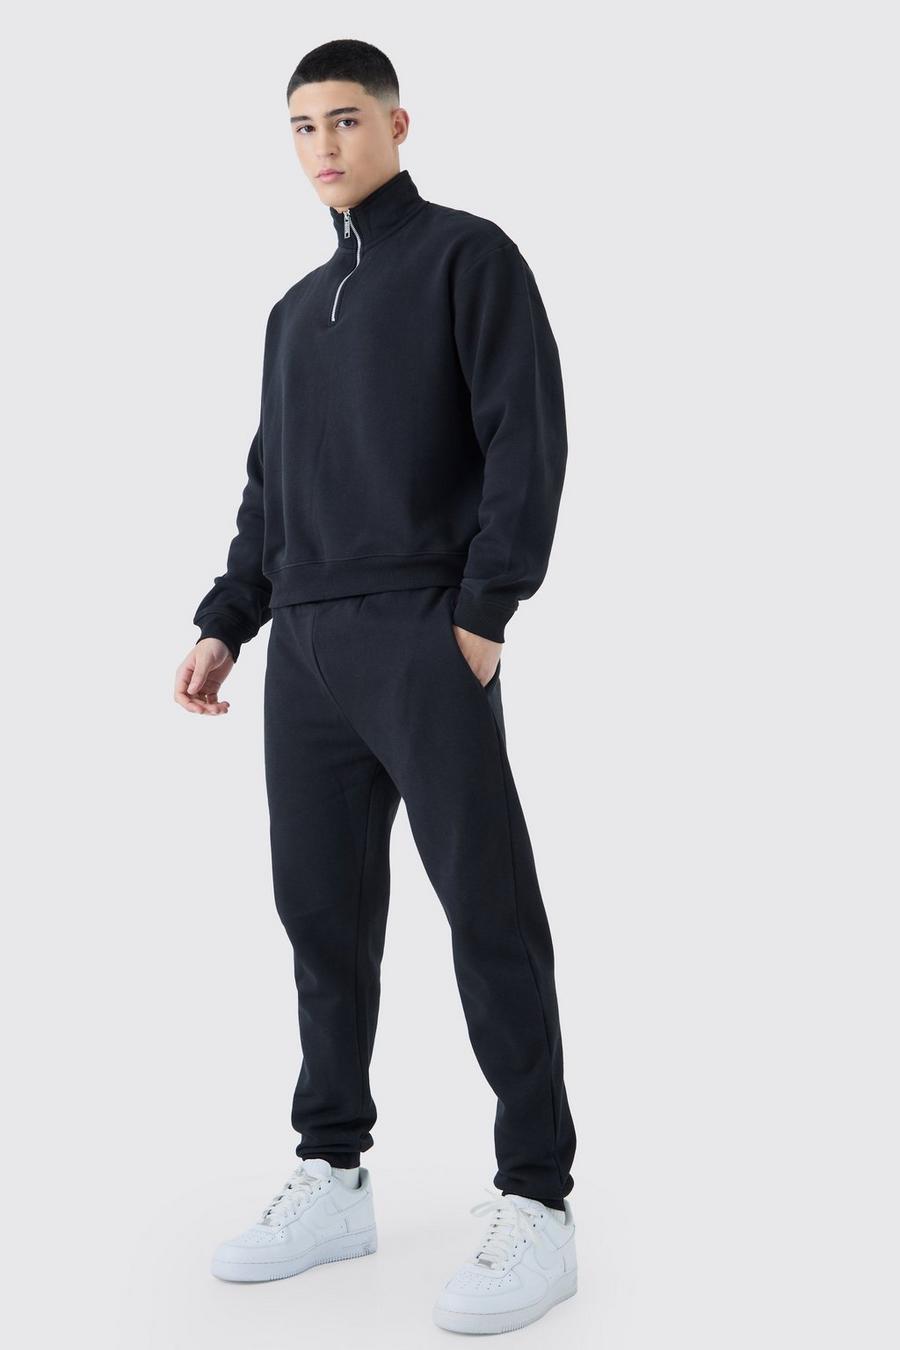 Kastiger Oversize Sweatshirt-Trainingsanzug mit 1/4 Reißverschluss, Black